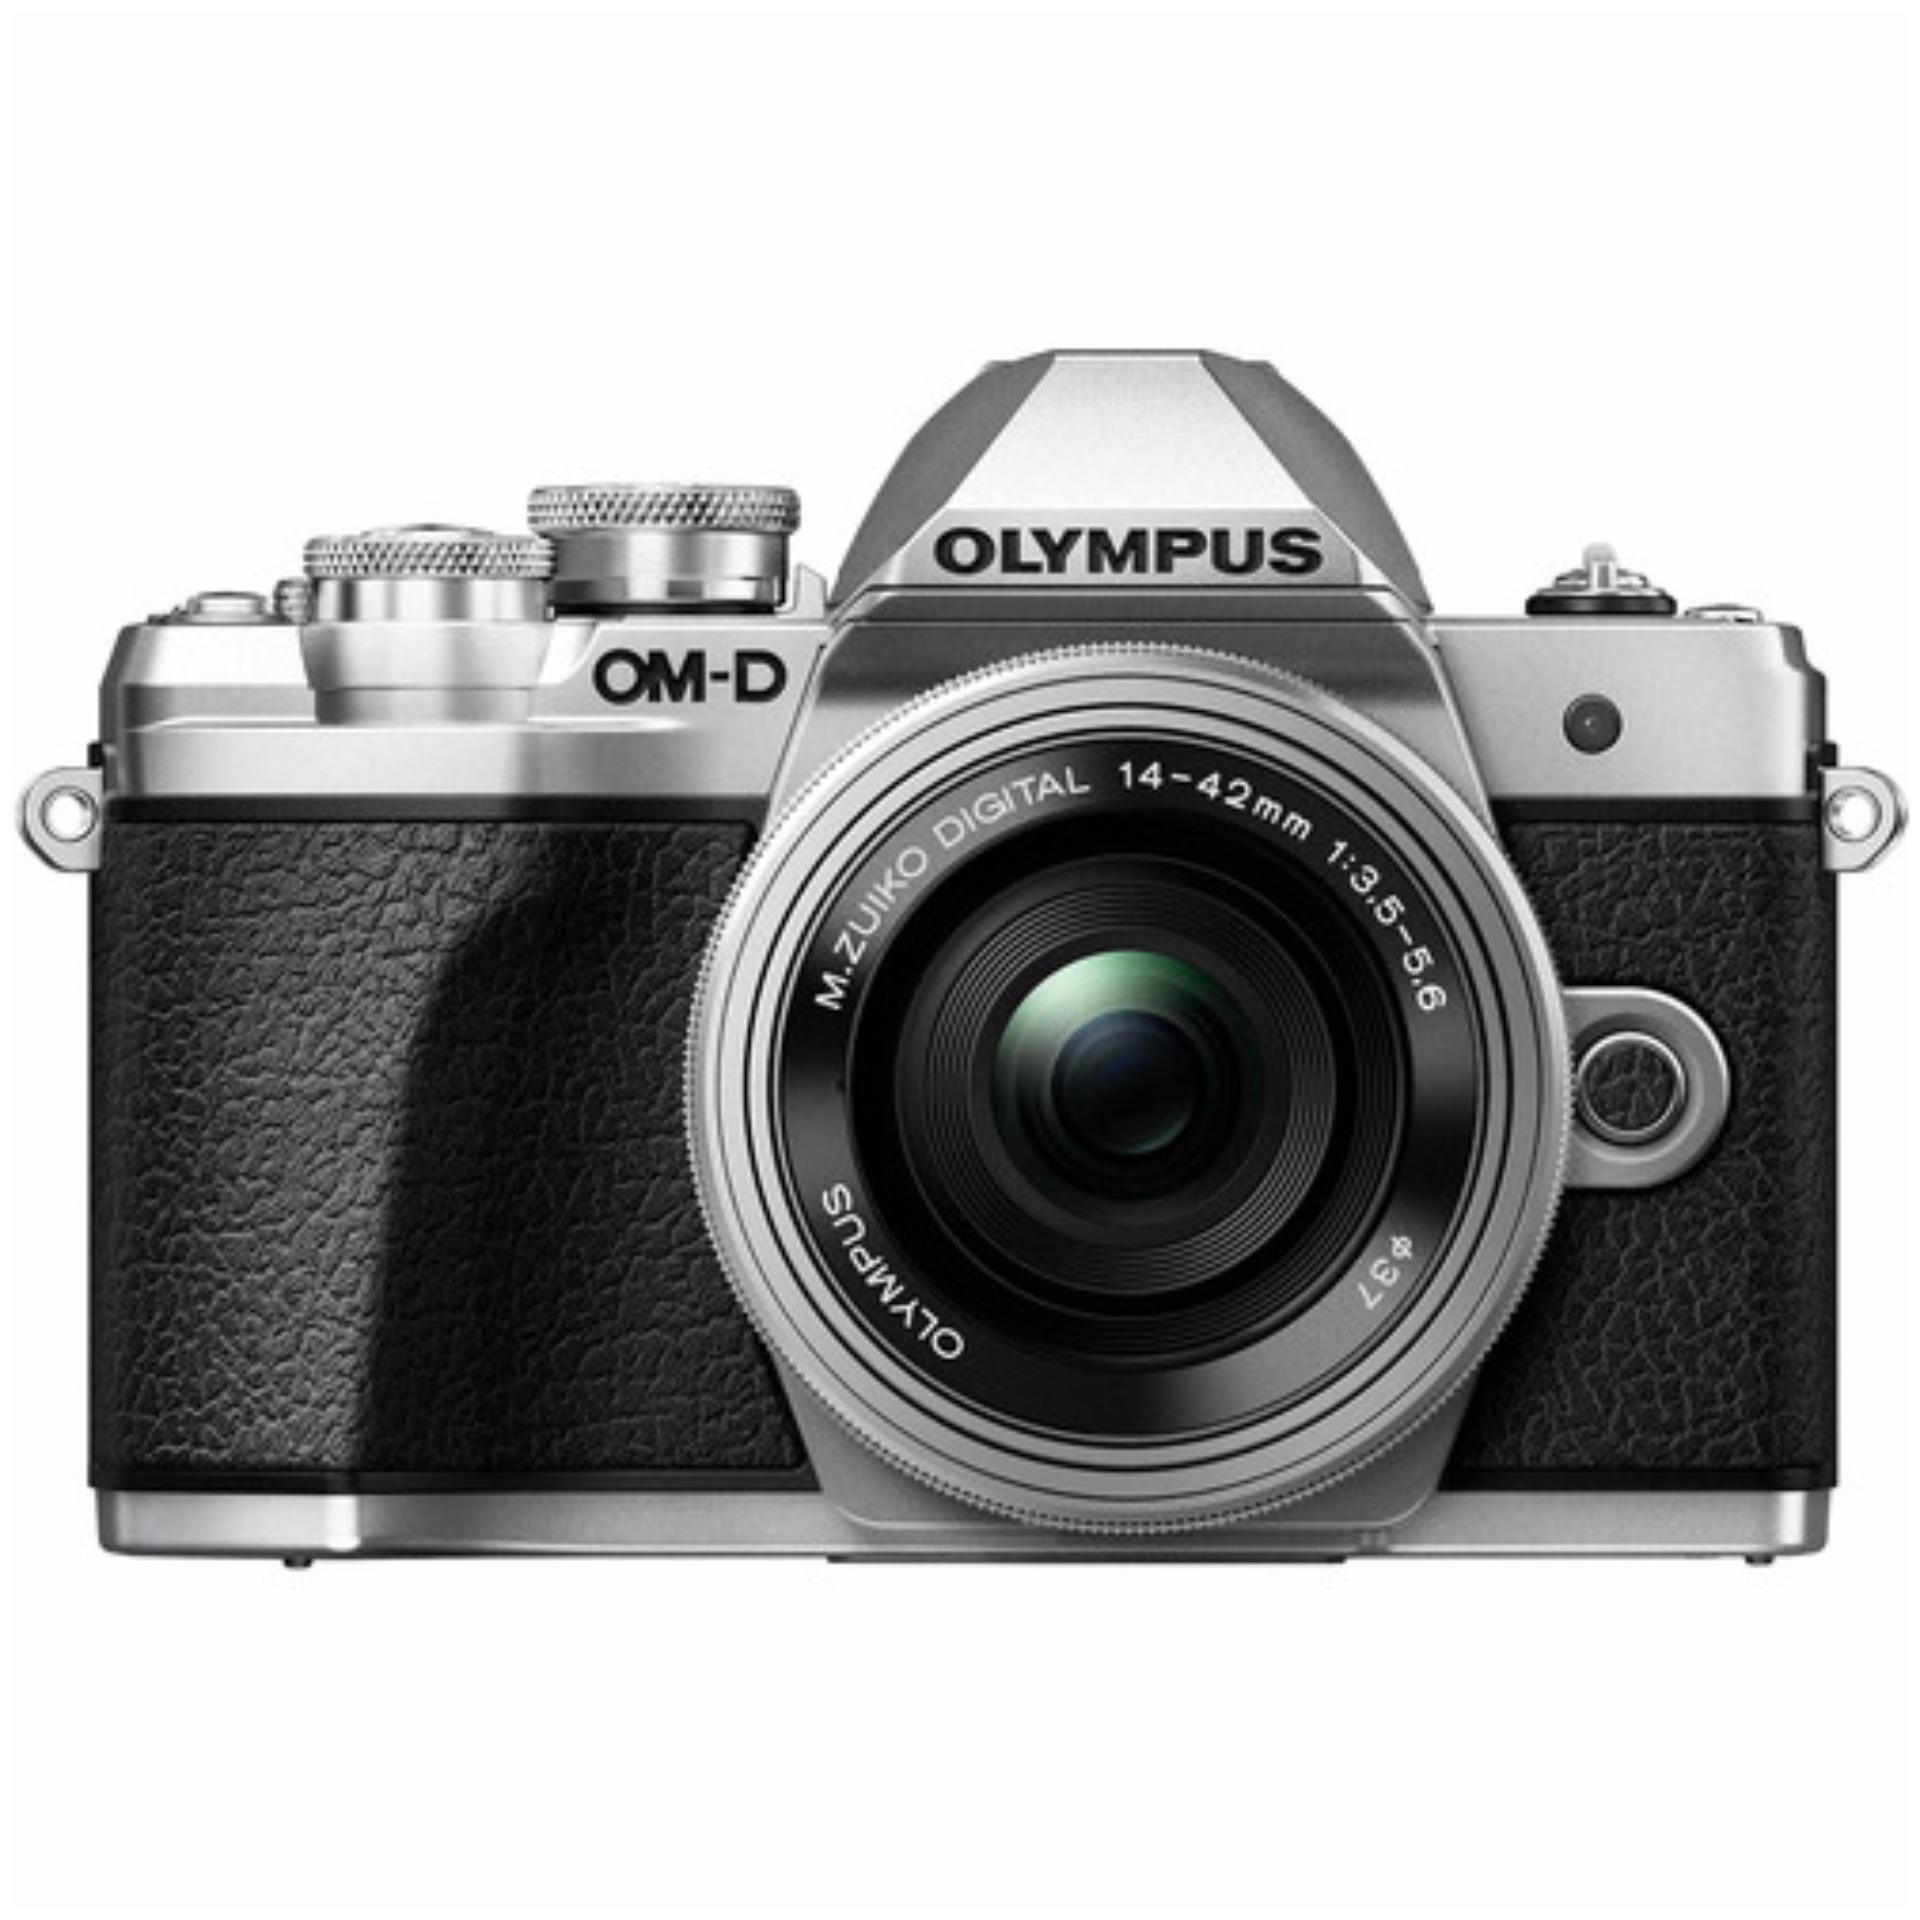 Olympus OM-D E-M10 Mark III SLK Mirrorless Micro Four Thirds Digital Camera with 14-42mm EZ Lens (Silver)